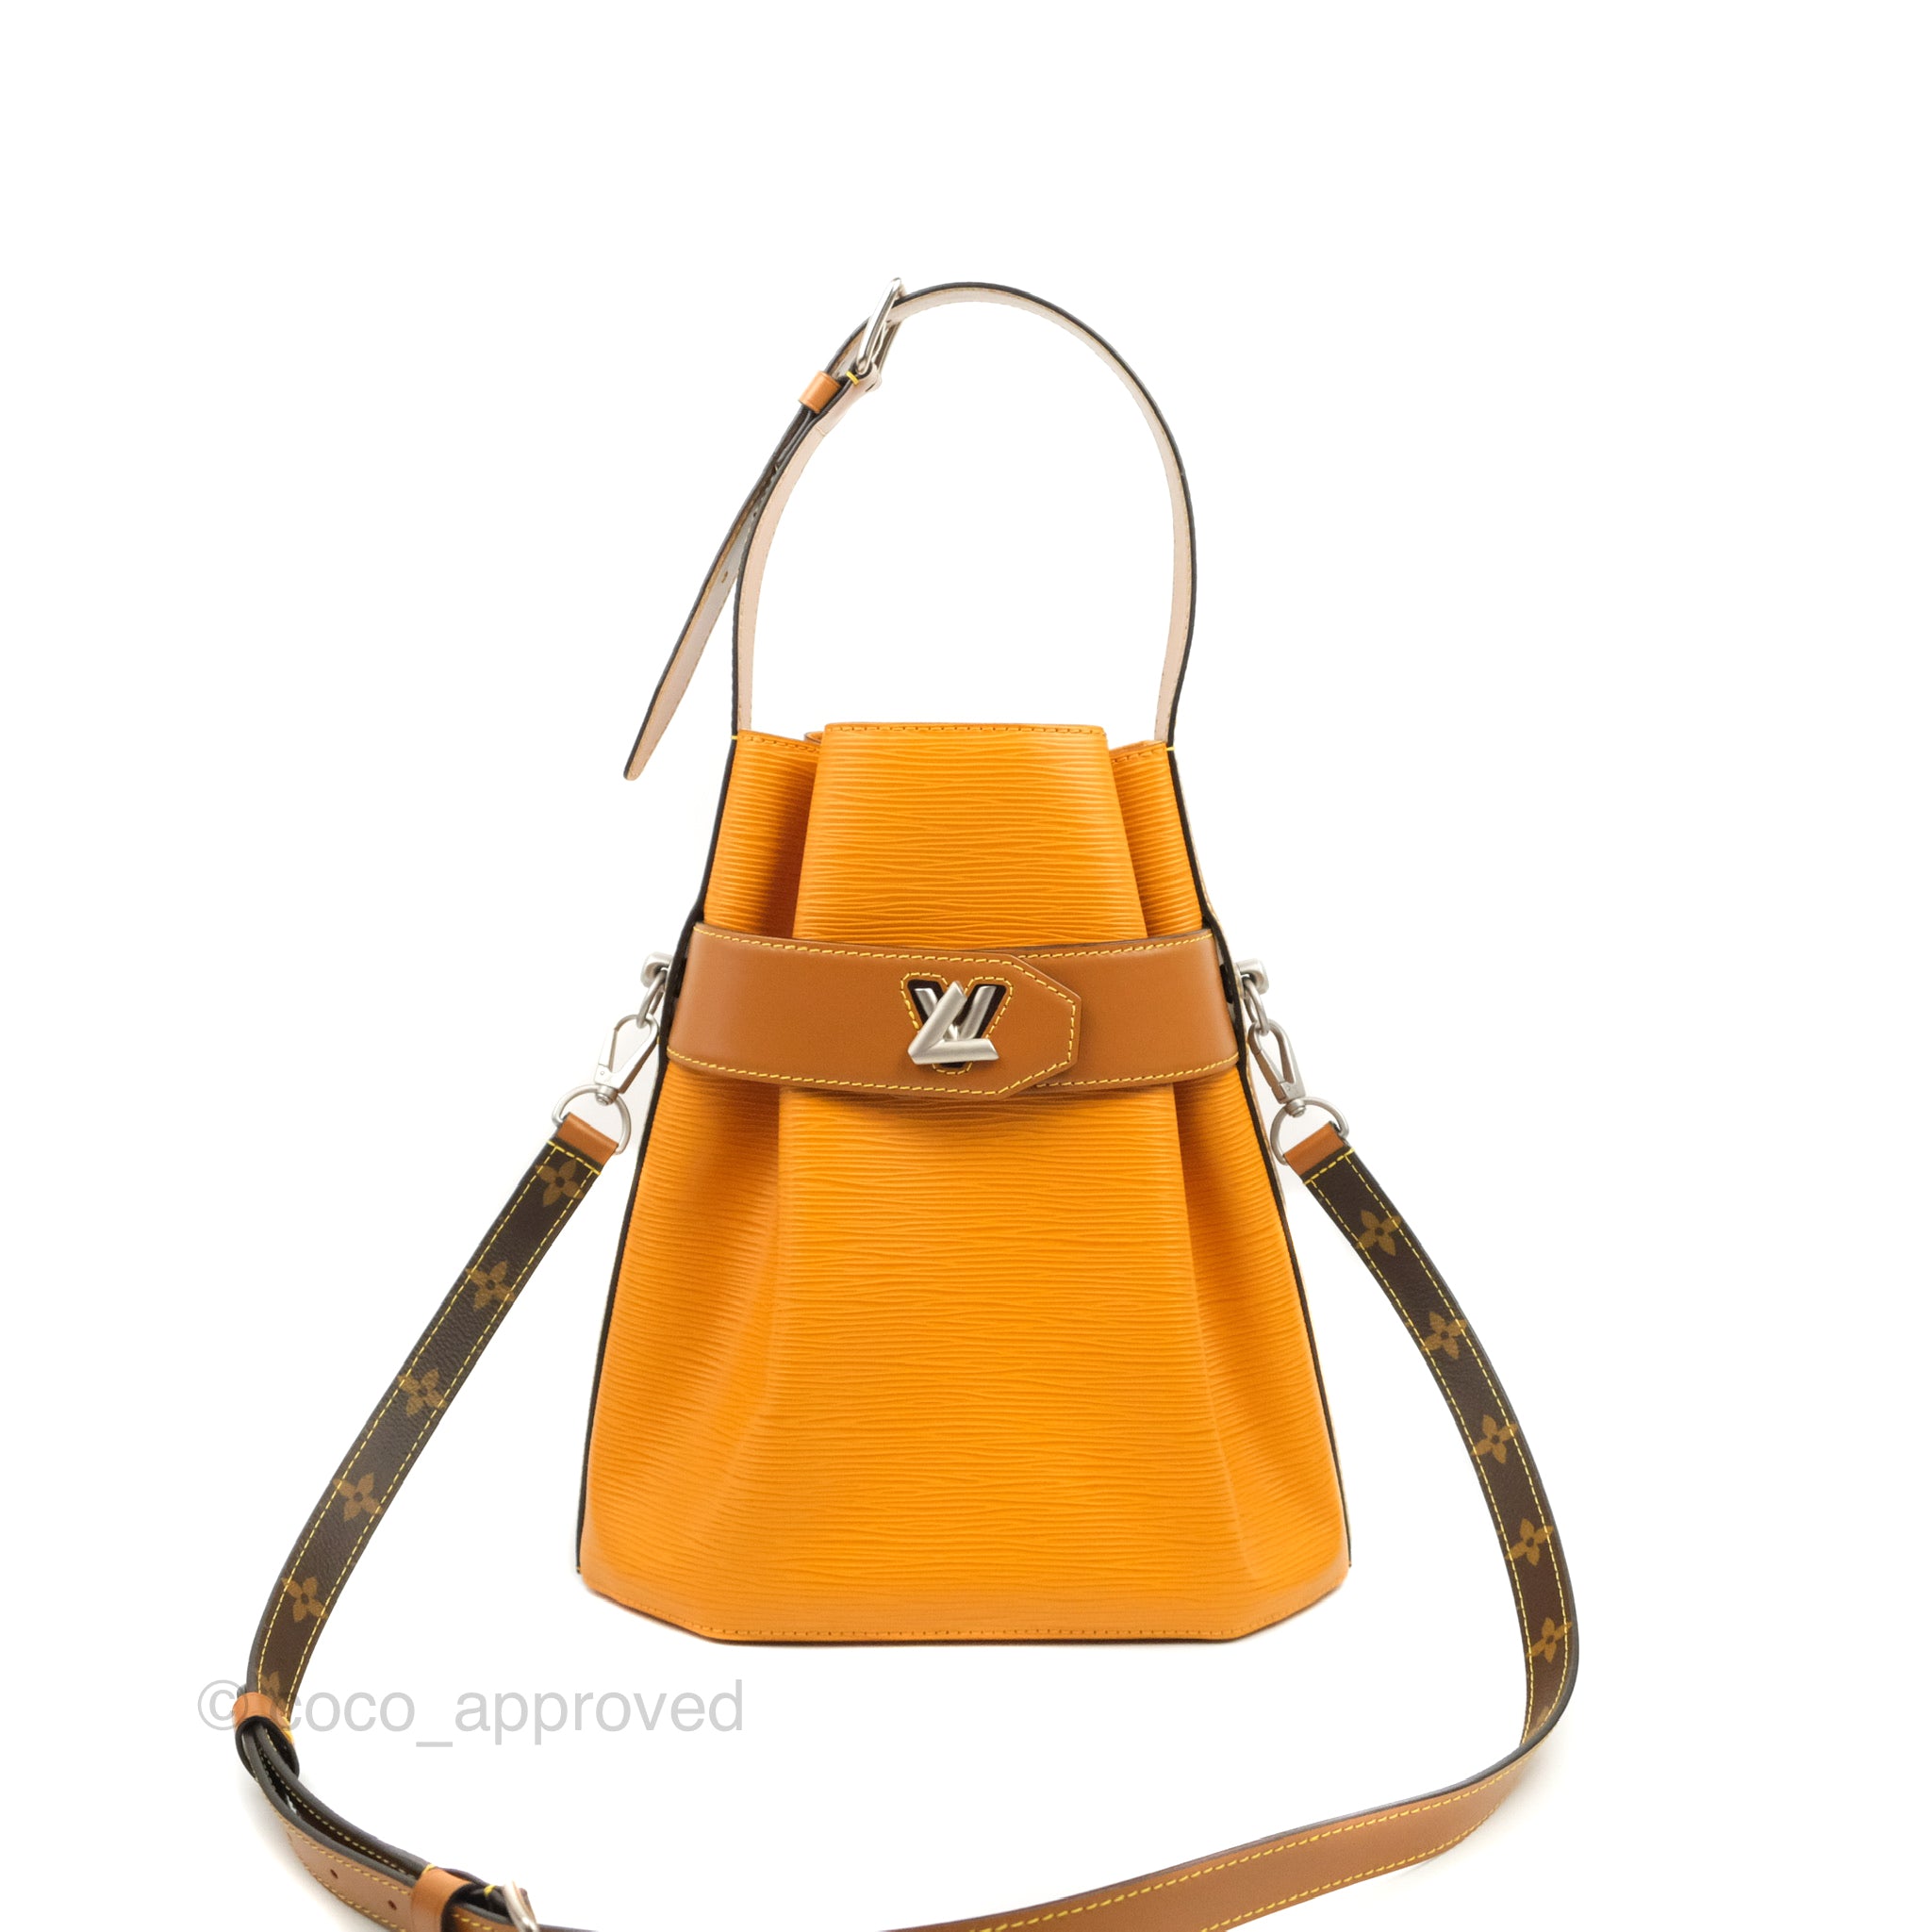 Louis Vuitton Bucket Bag in Orange